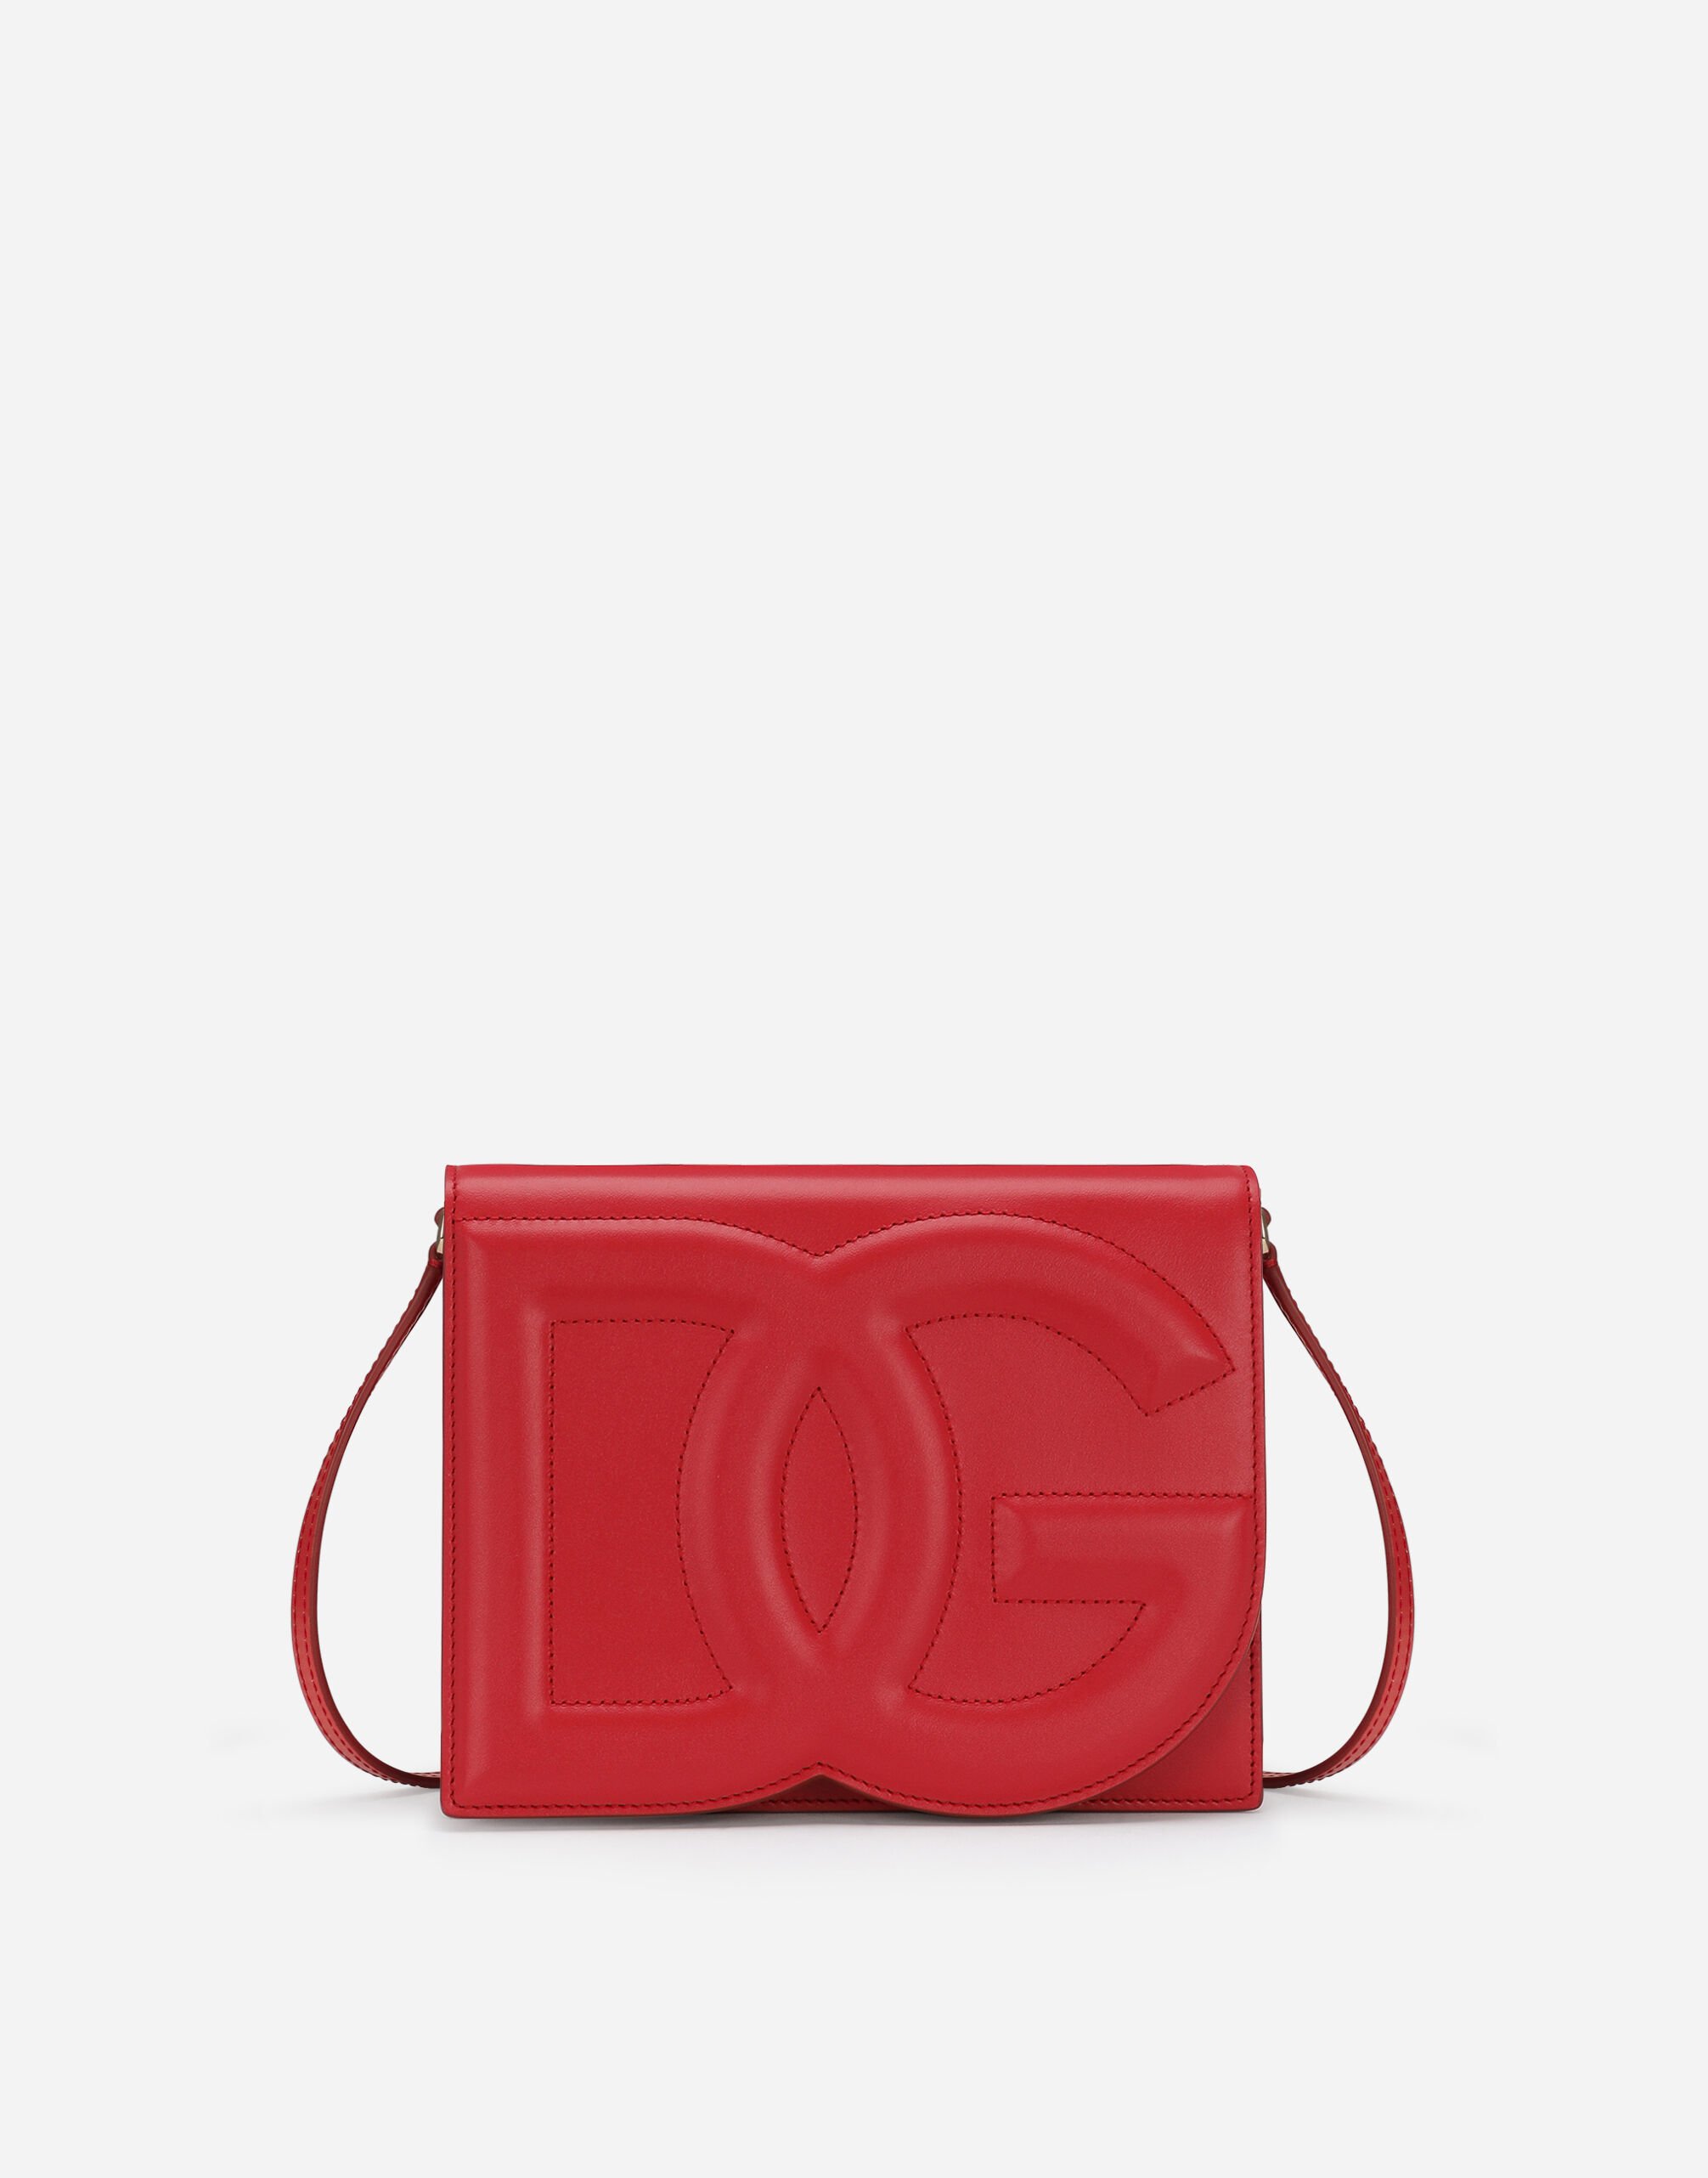 Dolce & Gabbana 카프스킨 DG 로고 크로스보디백 핑크 BB7287AS204